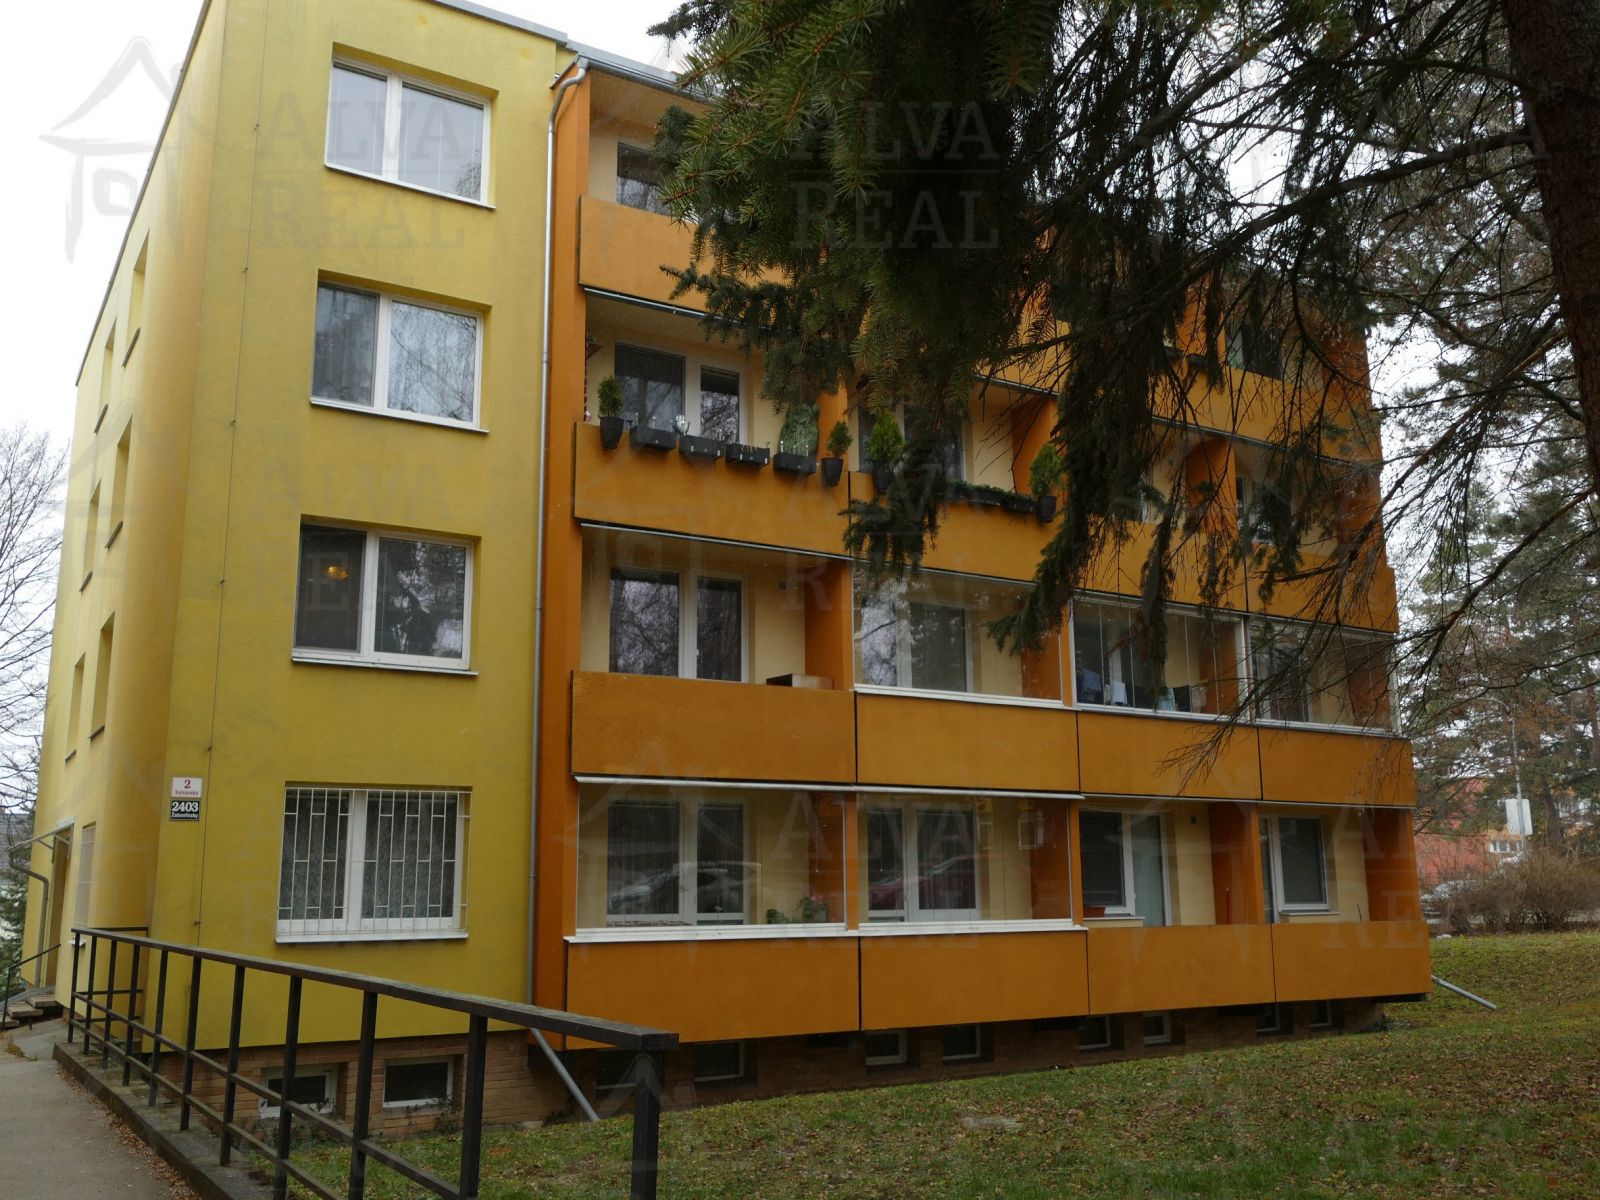 Prodej bytu 2+1 v OV Brno - Žabovřesky, ul. Kubánská, CP 57,77 m2 + sklep, 2 lodžie., obrázek č. 1